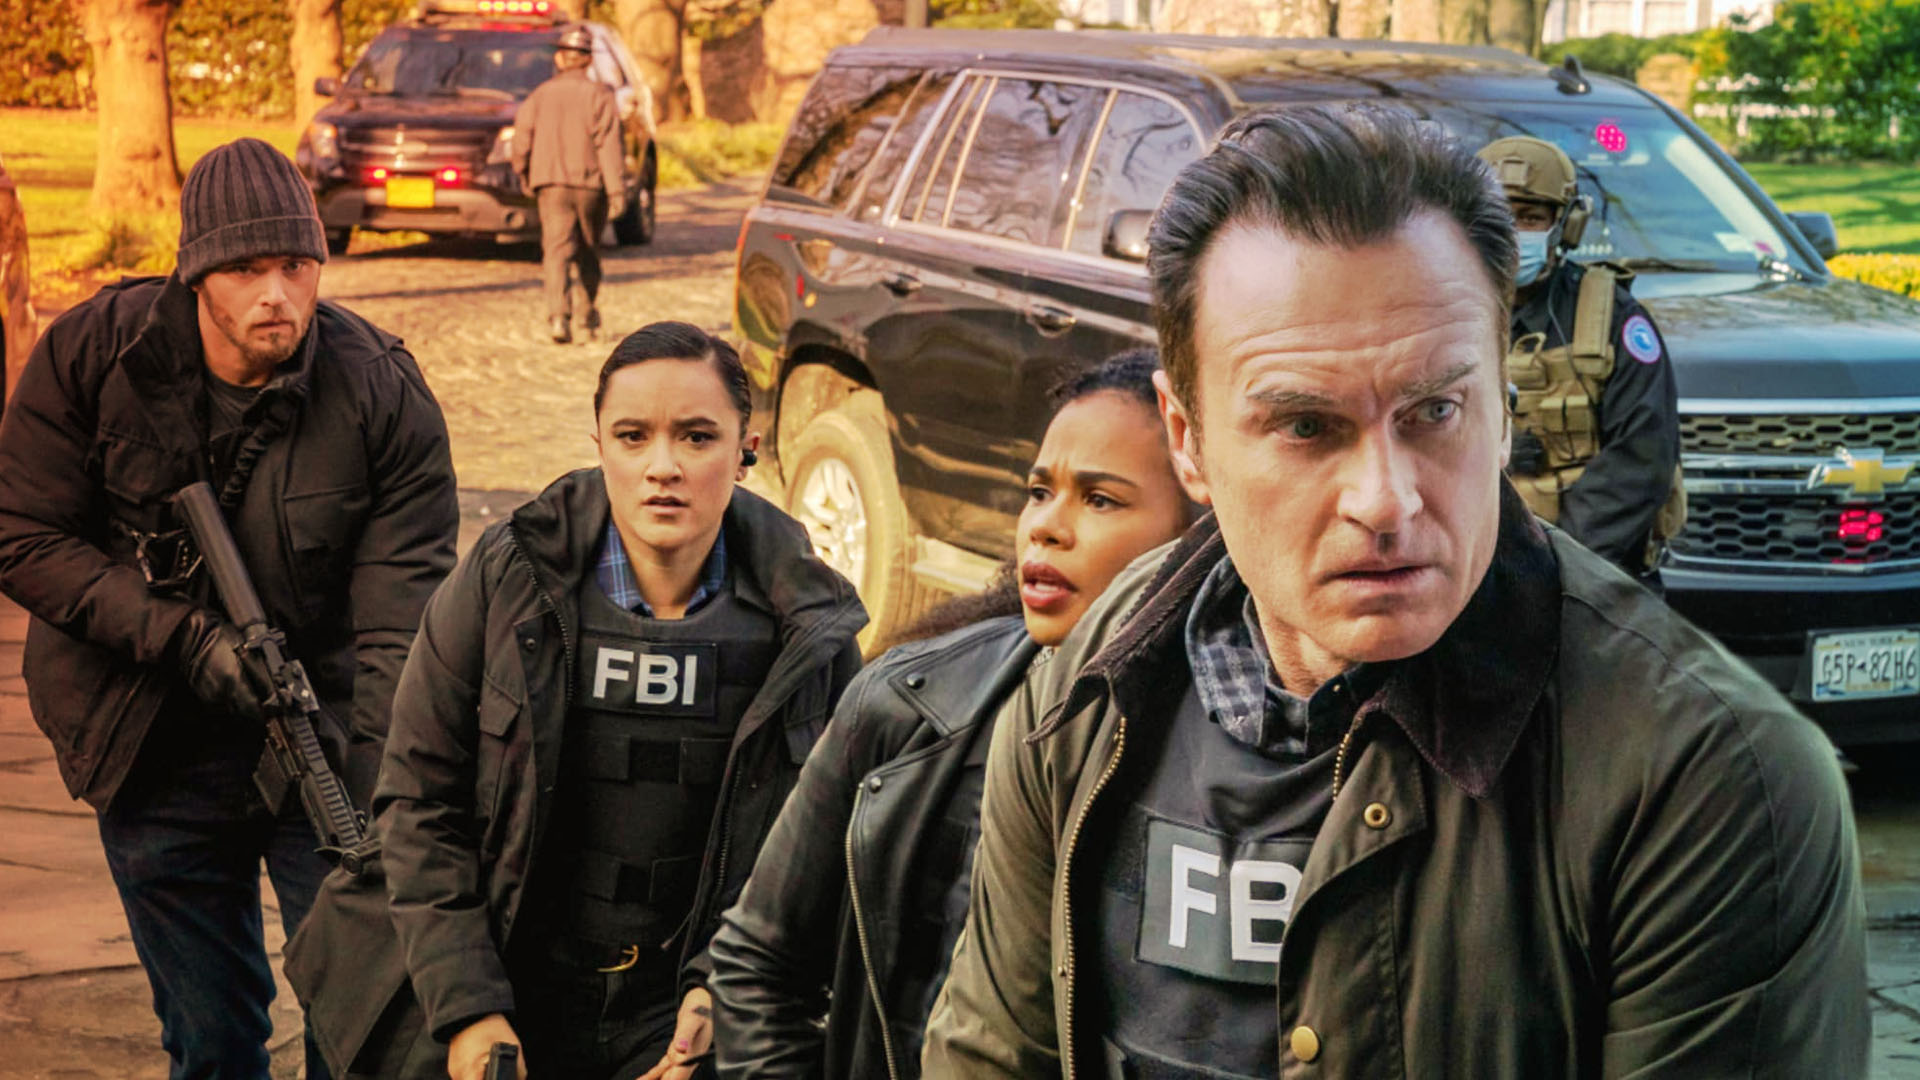 FBI: Most Wanted Season 4